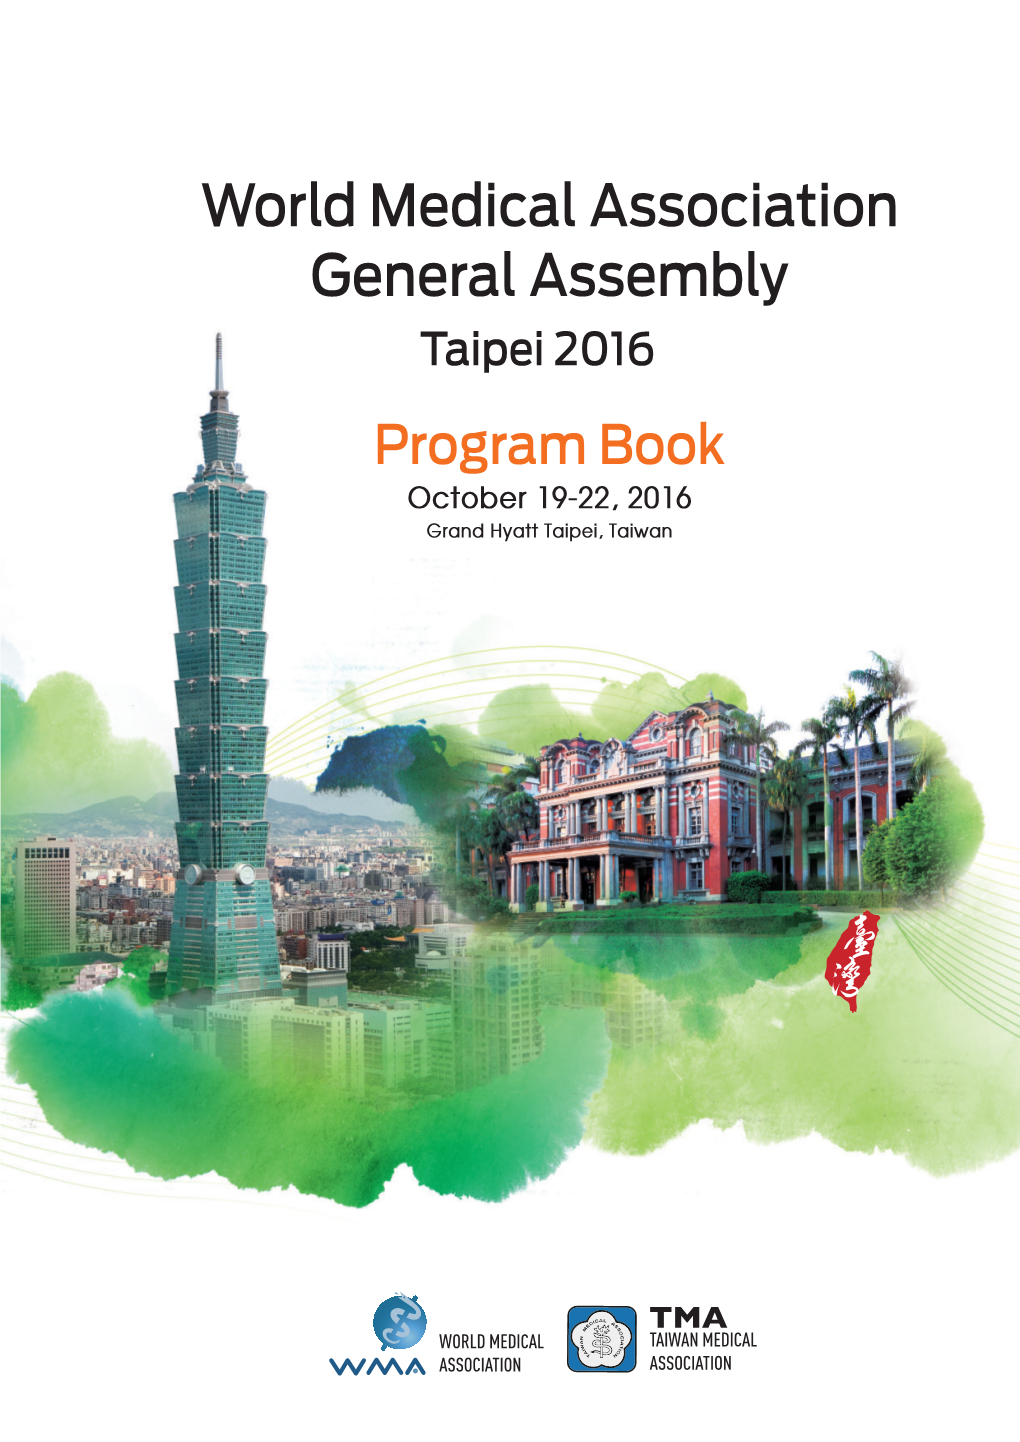 World Medical Association General Assembly Taipei 2016 Program Book October 19-22, 2016 Grand Hyatt Taipei, Taiwan